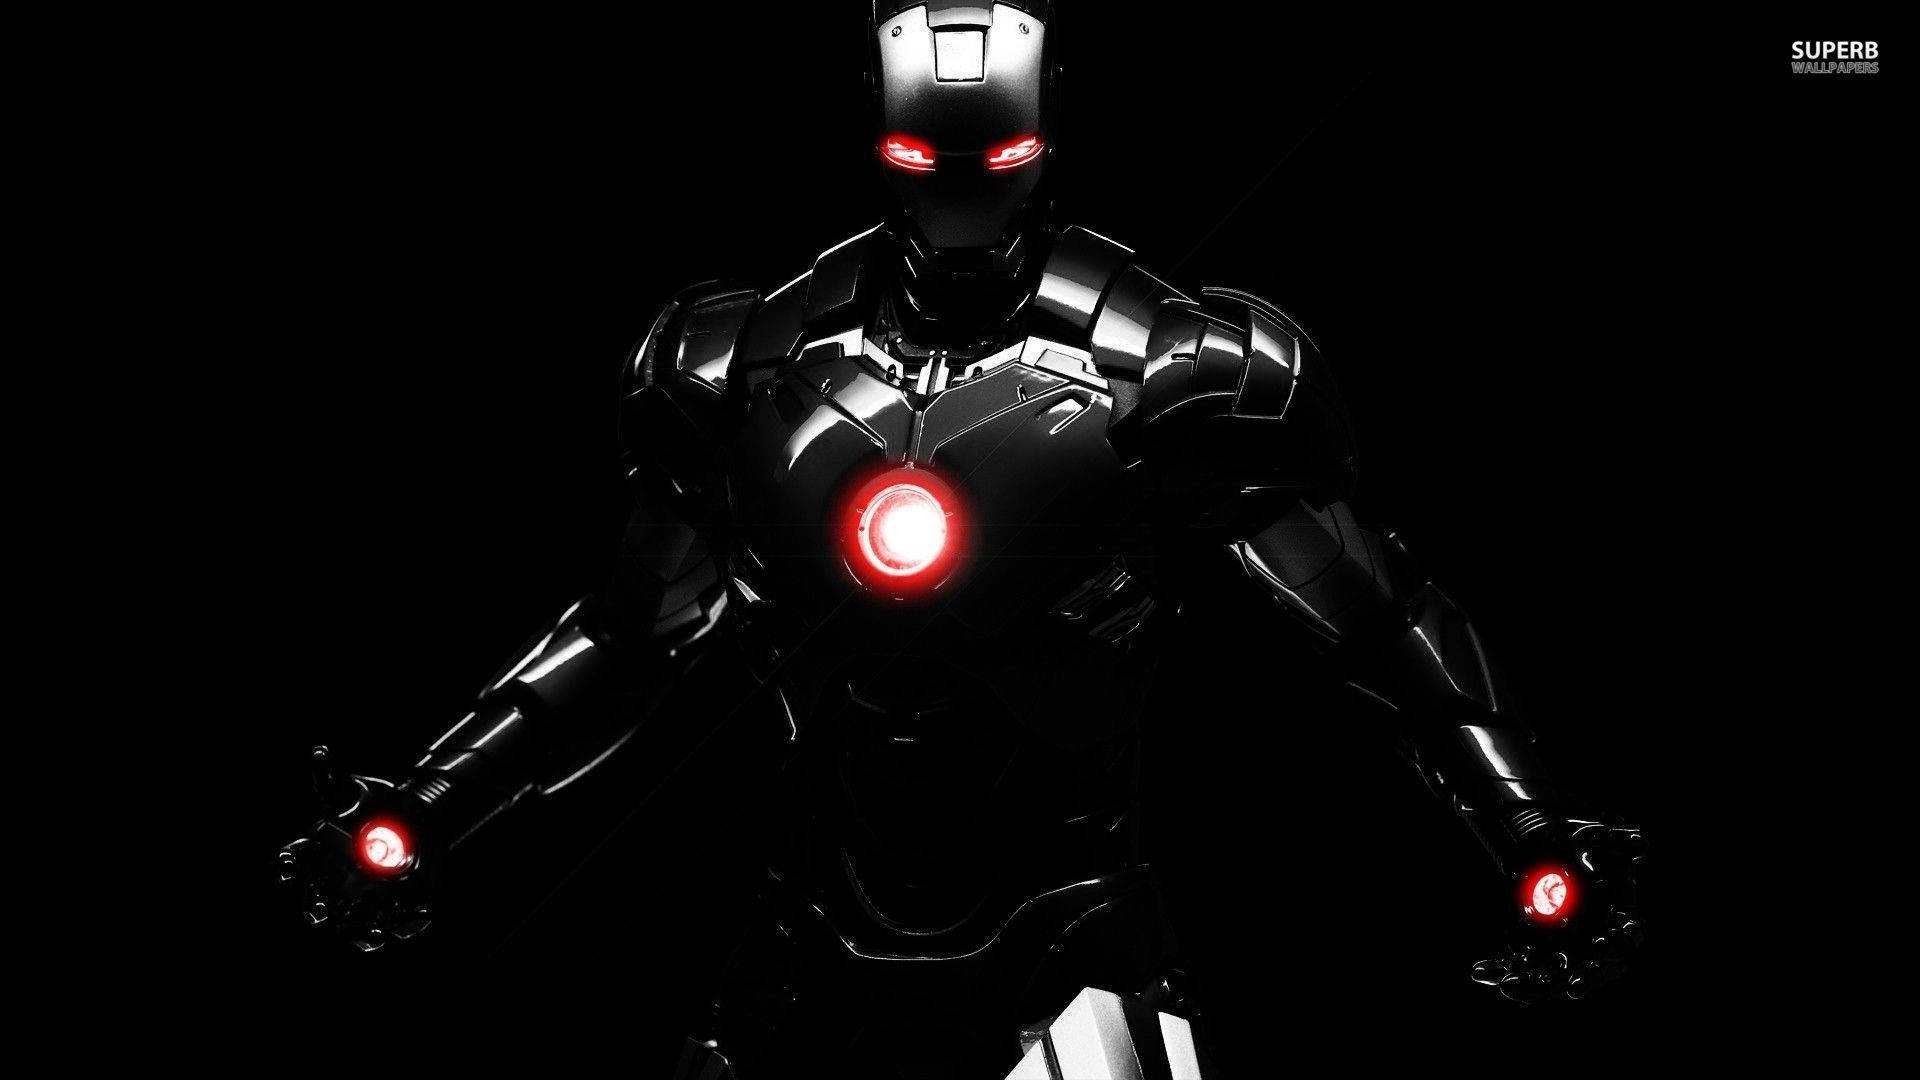 Cool Iron Man Suit In Black Wallpaper